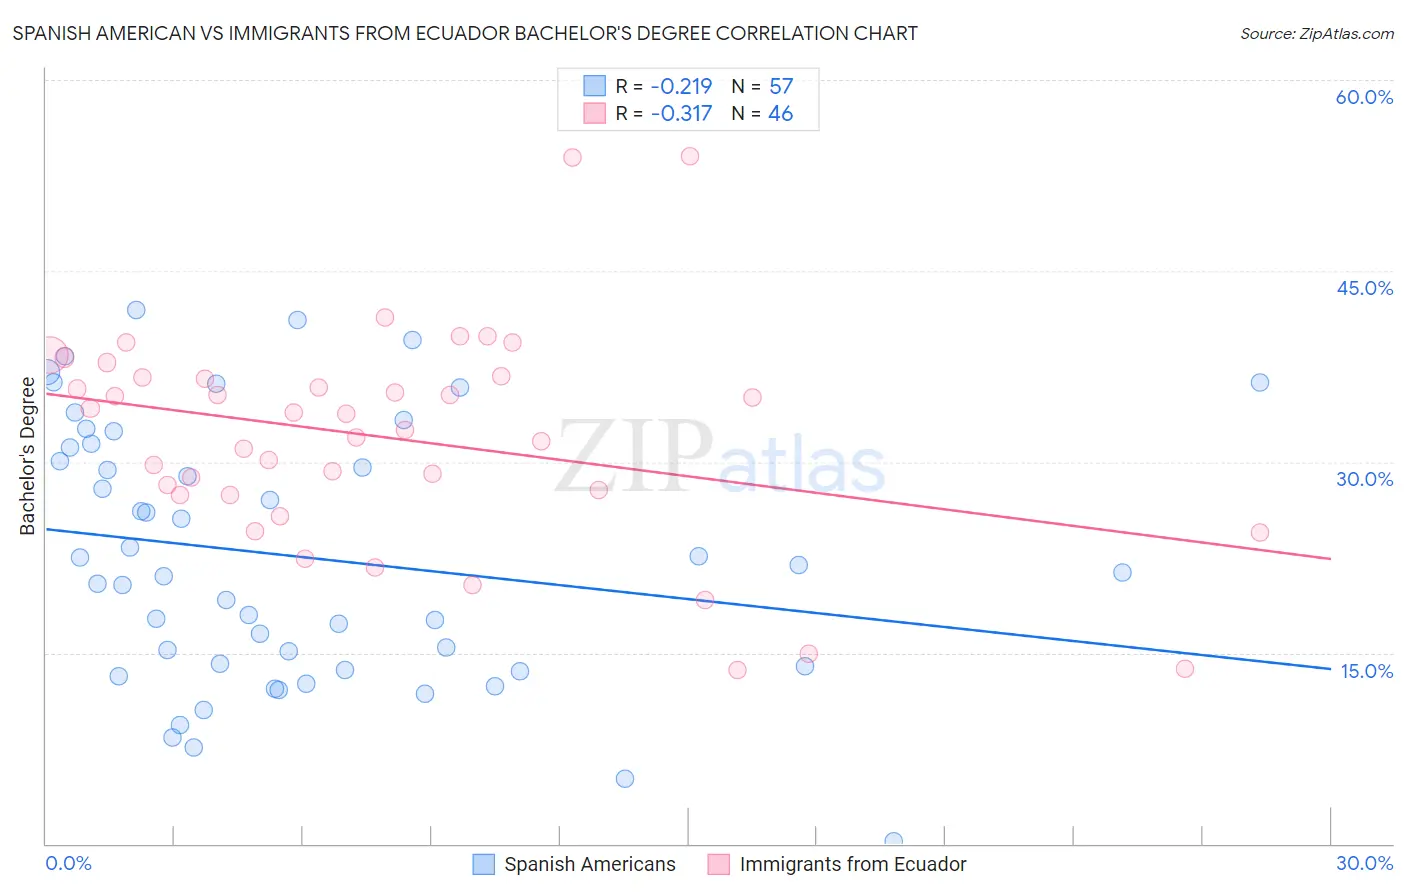 Spanish American vs Immigrants from Ecuador Bachelor's Degree